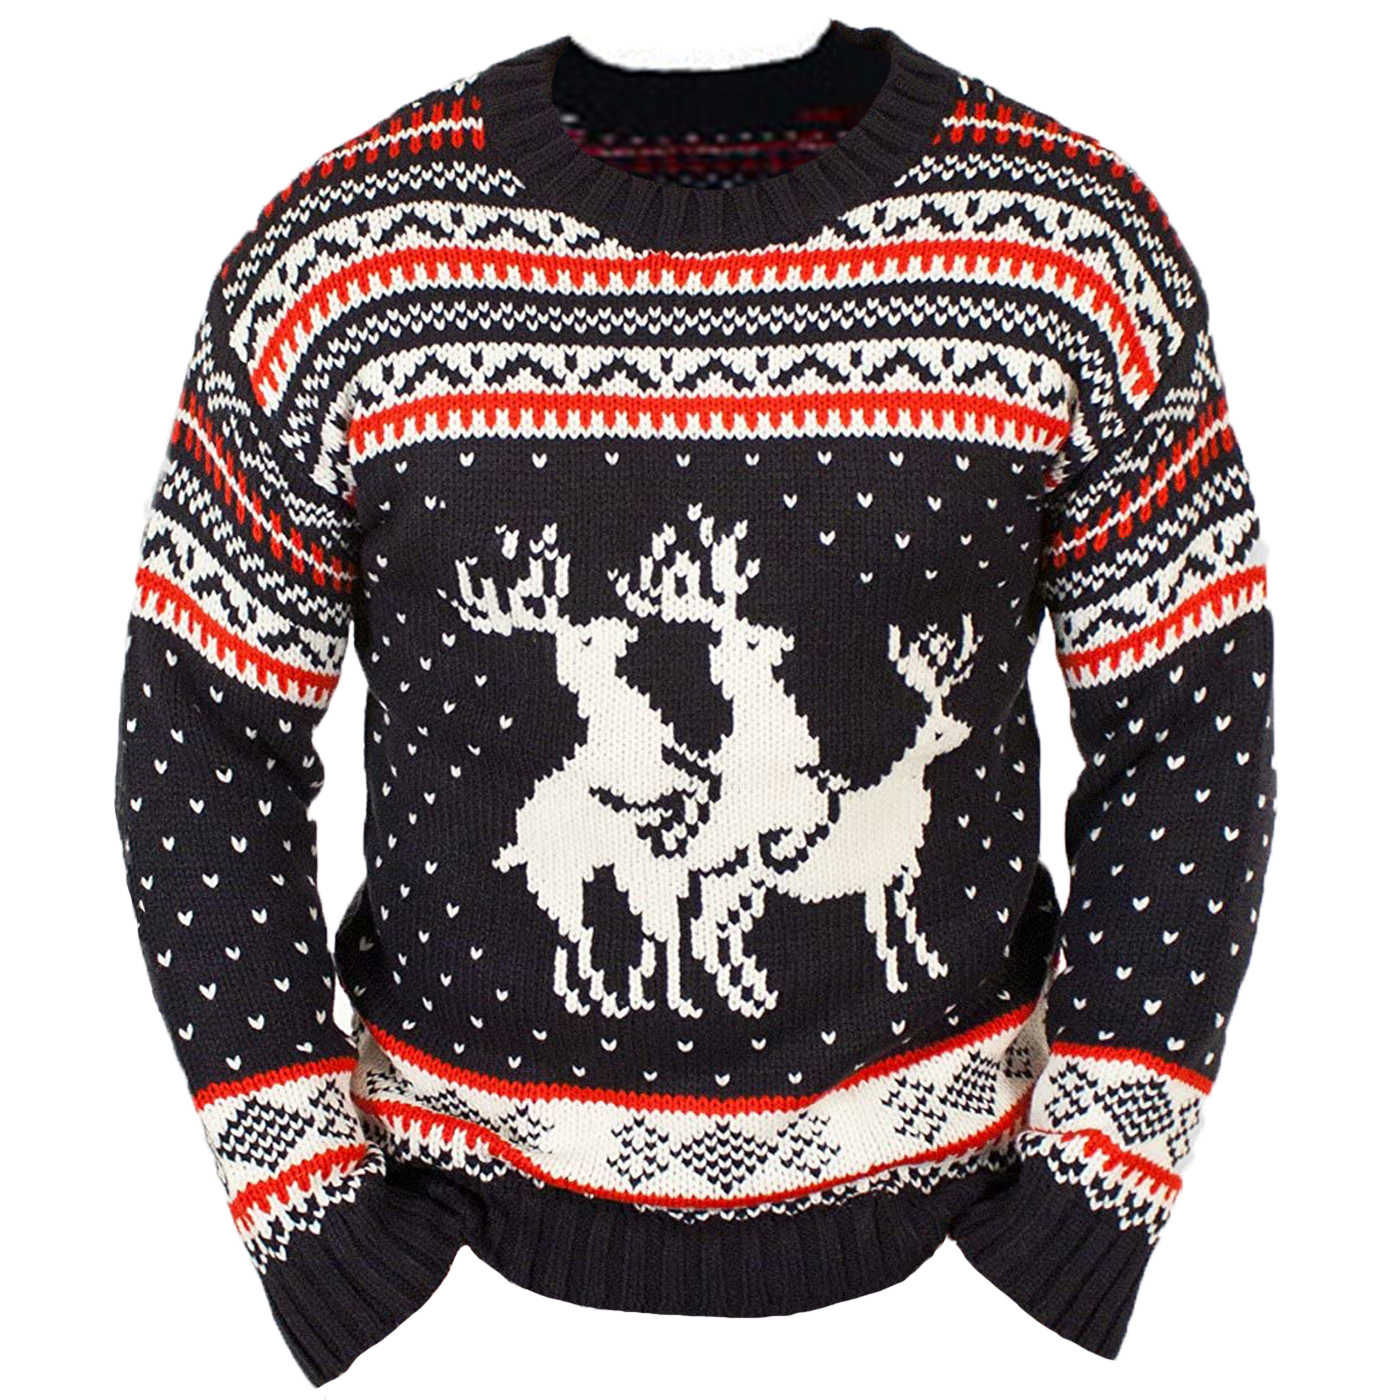 Reindeer threesome christmas sweater